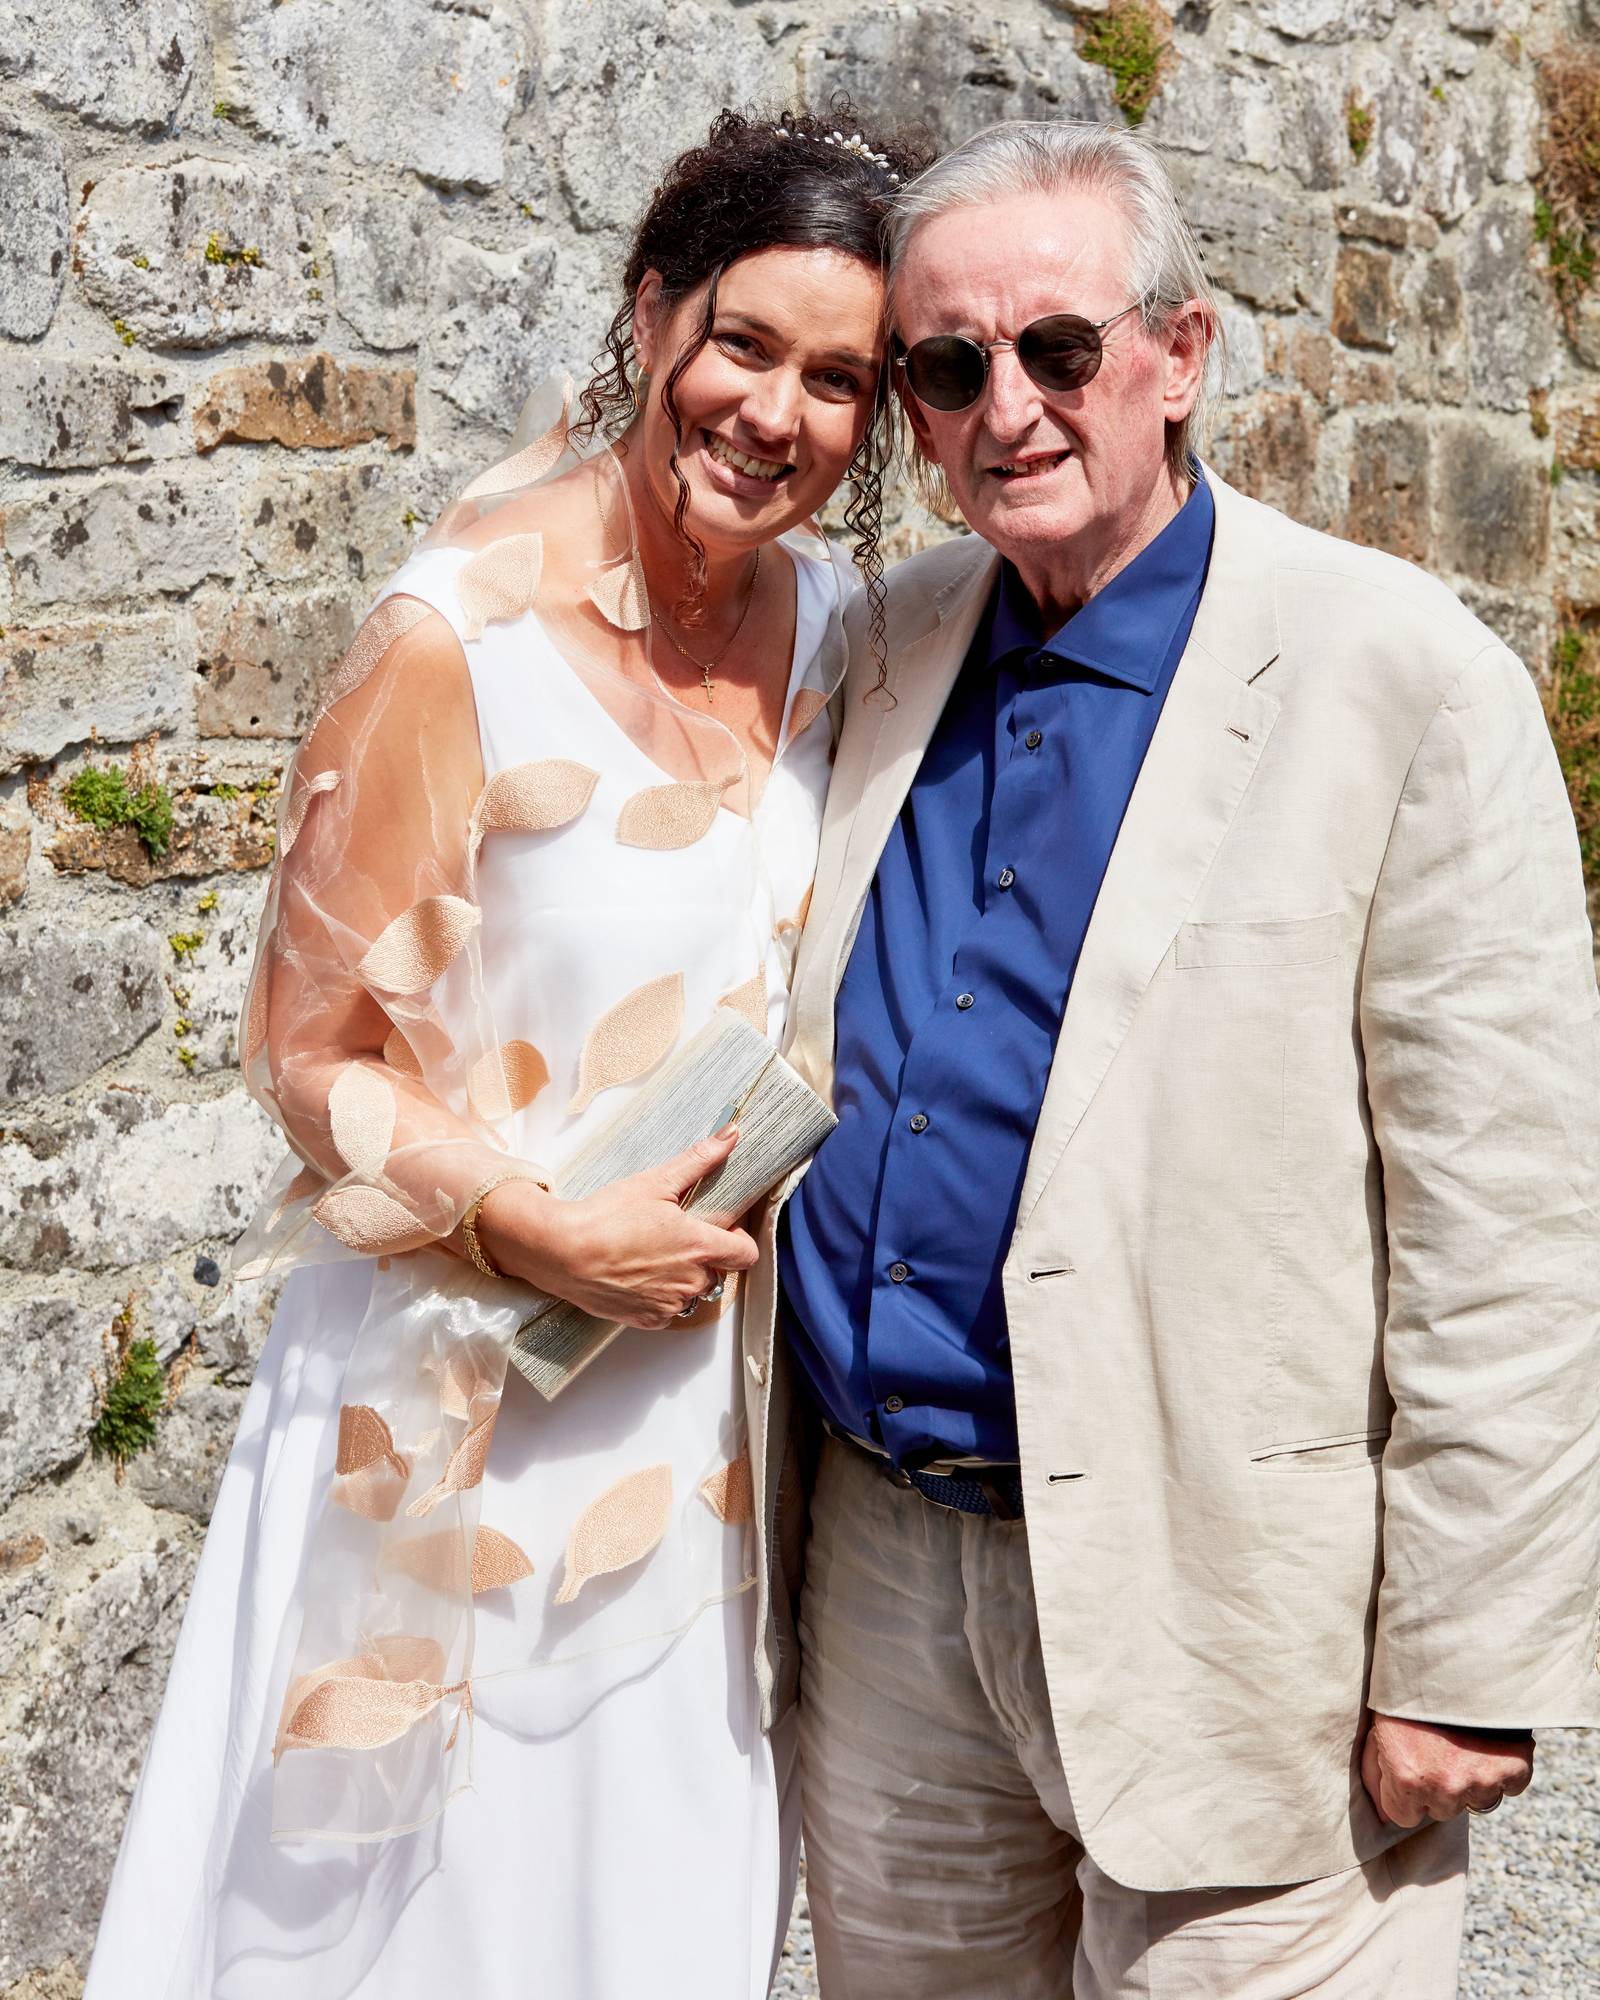 L-R: Helen Phelan in white wedding dress beside Micheál Ó Suilleabháin in cream coloured suit and blue shirt. Both standing.